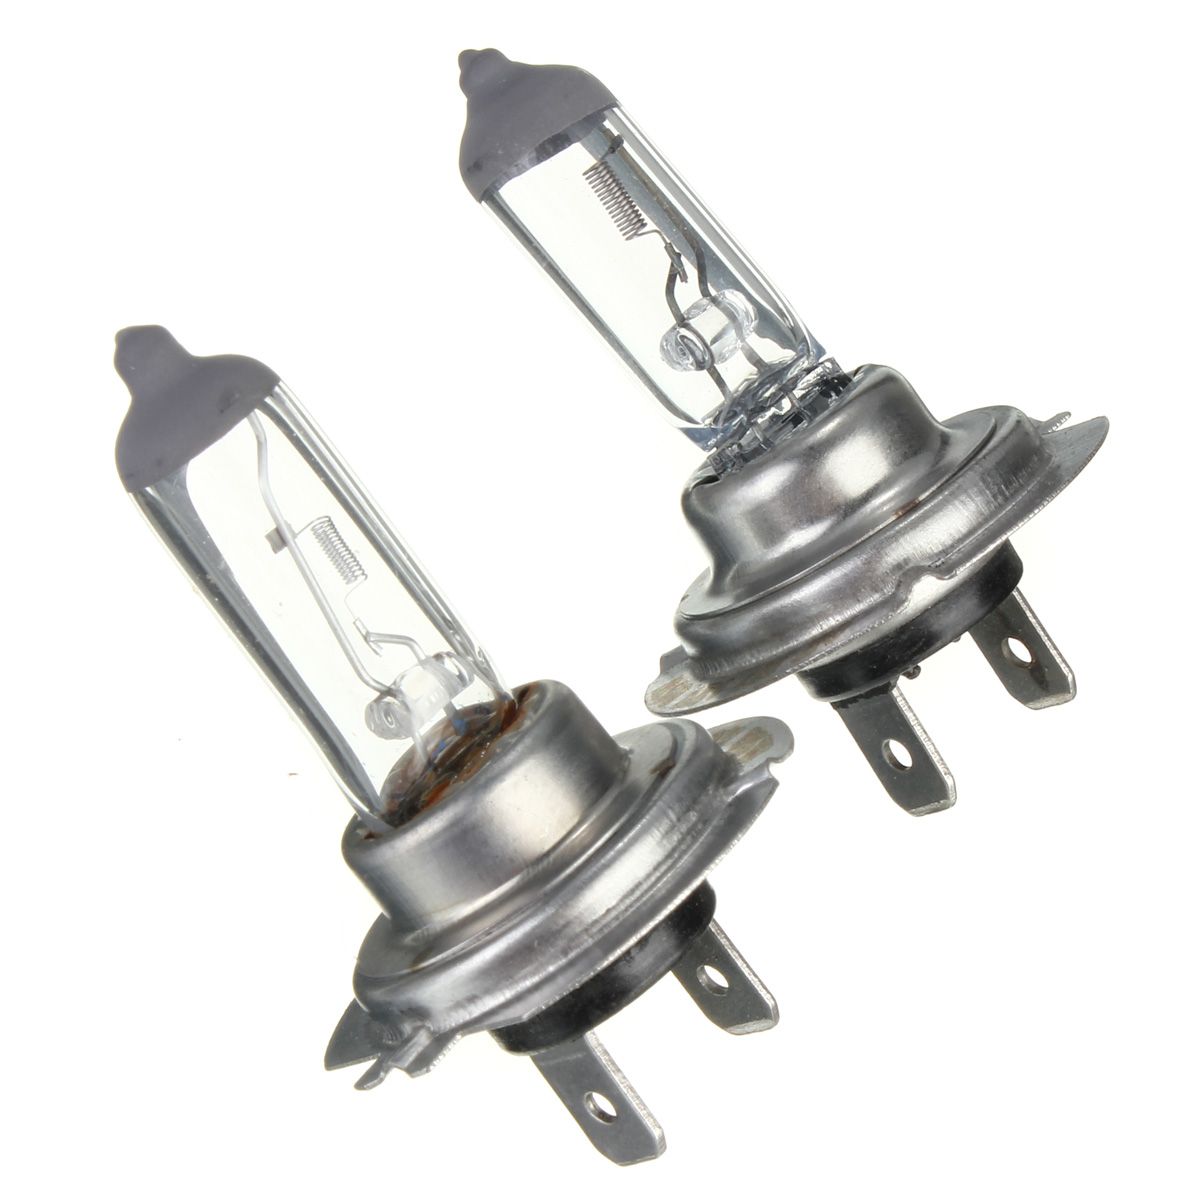 2Pcs-12V-55W-H7-Halogen-Car-Fog-Light-Bulb-Headlamp-Clear-Glass-Bulbs-Lamp-Super-Bright-White-1723403